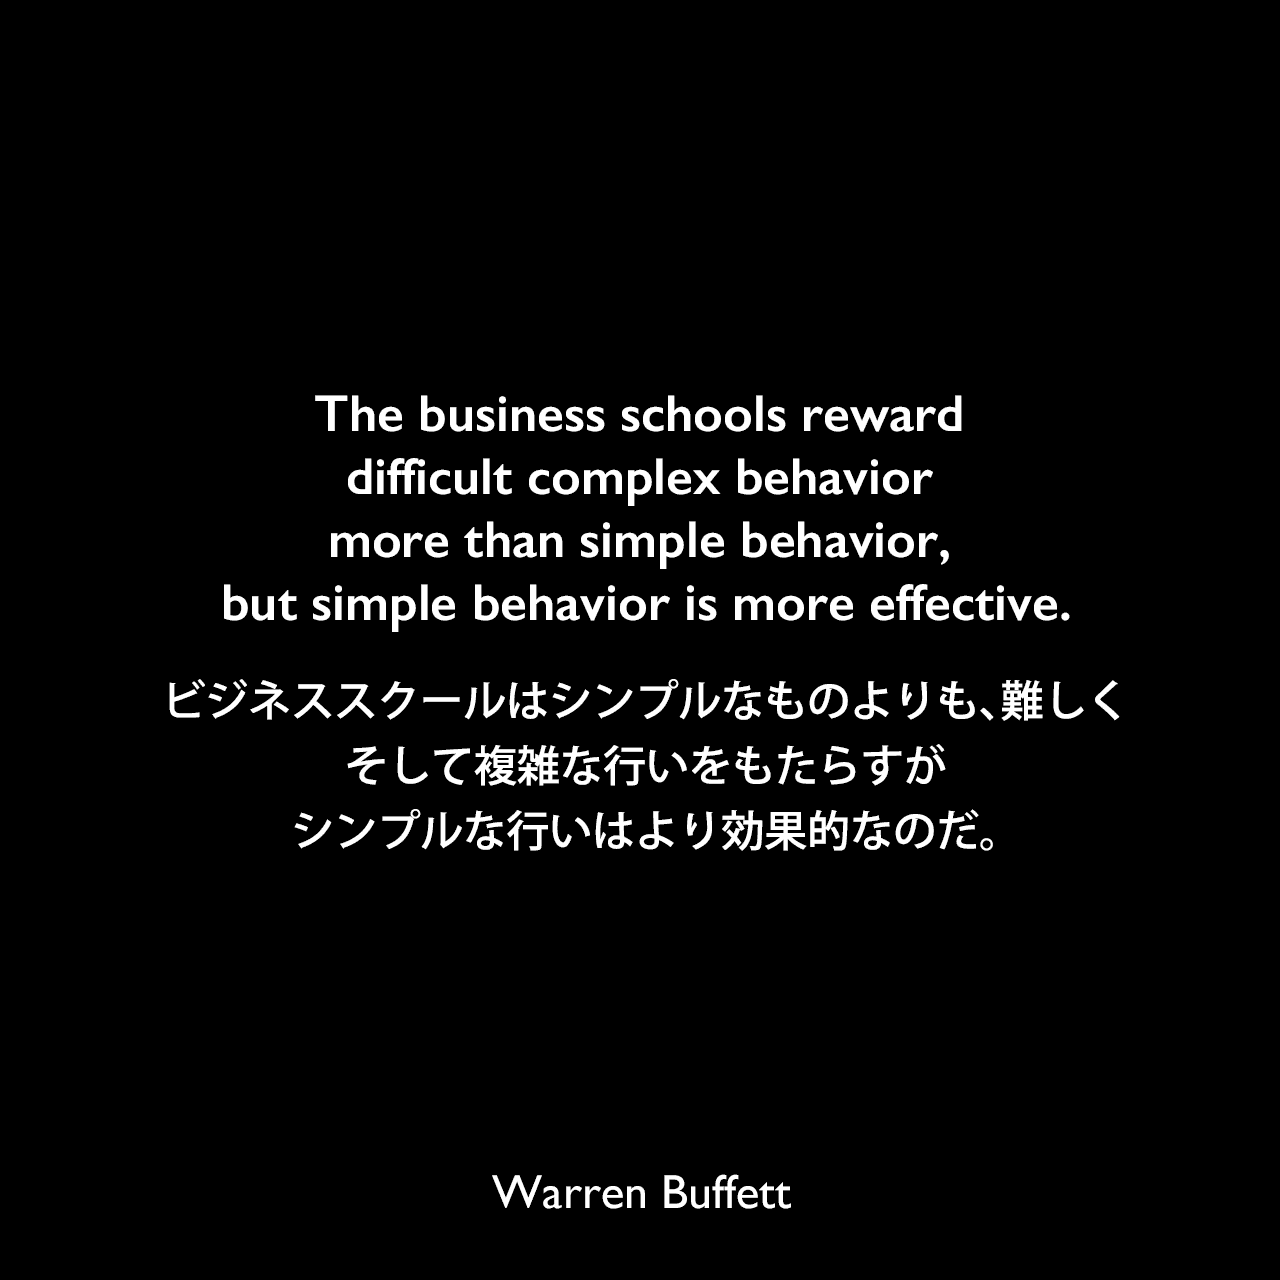 The business schools reward difficult complex behavior more than simple behavior, but simple behavior is more effective.ビジネススクールはシンプルなものよりも、難しく、そして複雑な行いをもたらすが、シンプルな行いはより効果的なのだ。Warren Buffett